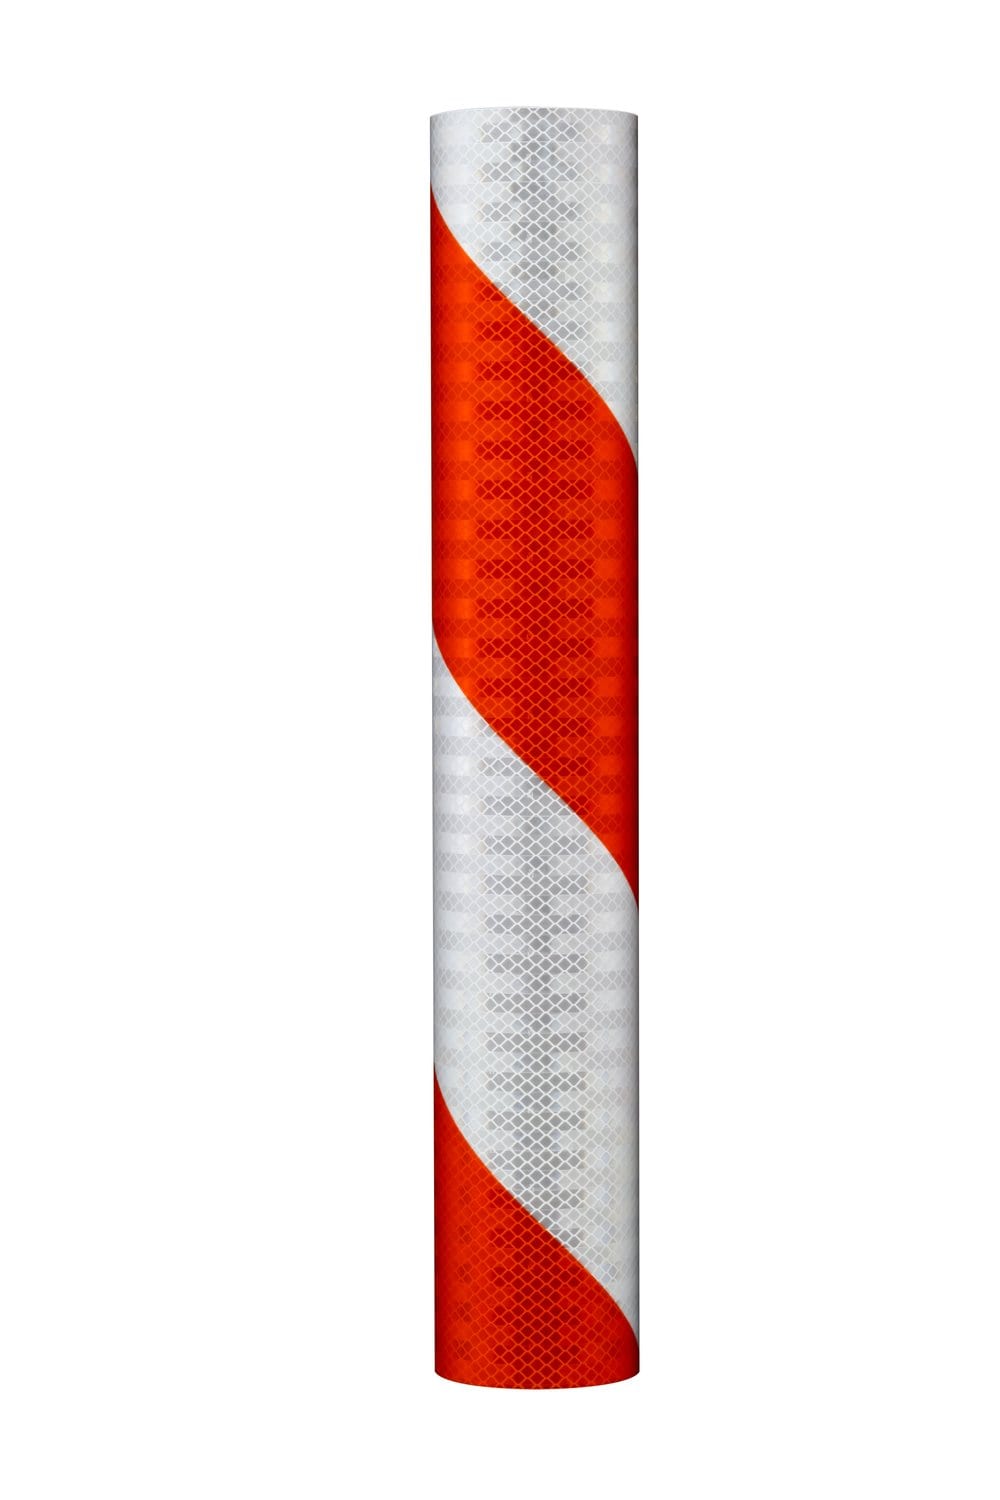 7010389379 - 3M Flexible Prismatic Reflective Barricade Sheeting 3334L Orange/White,
4 in stripe/left, 7.75 in x 100 yd